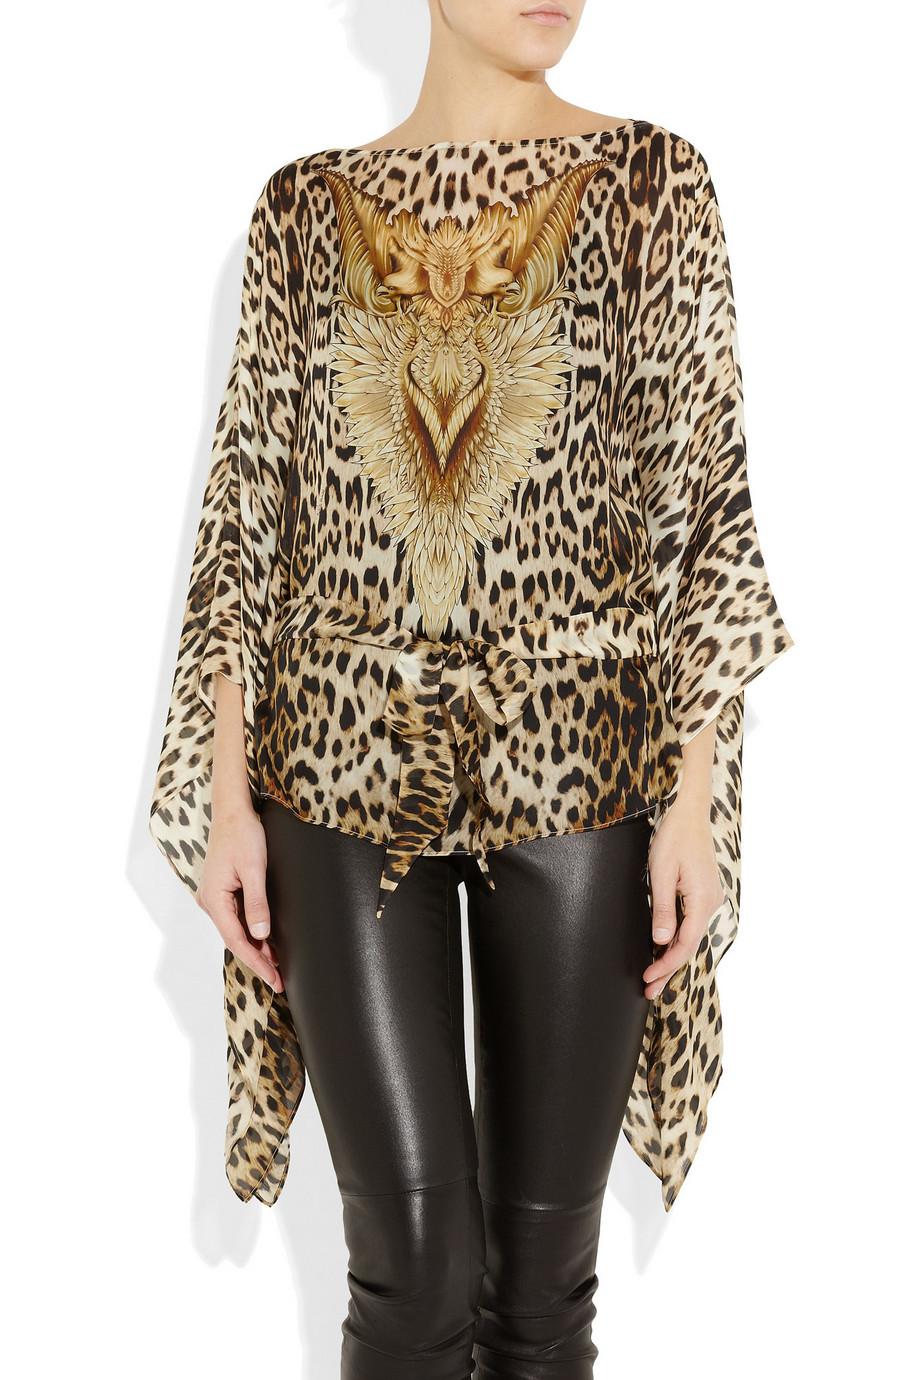 UNWORN Roberto Cavalli Animal Wild Cat Cheetah Print Silk Tunic Kaftan Belt 40 In Good Condition For Sale In Switzerland, CH